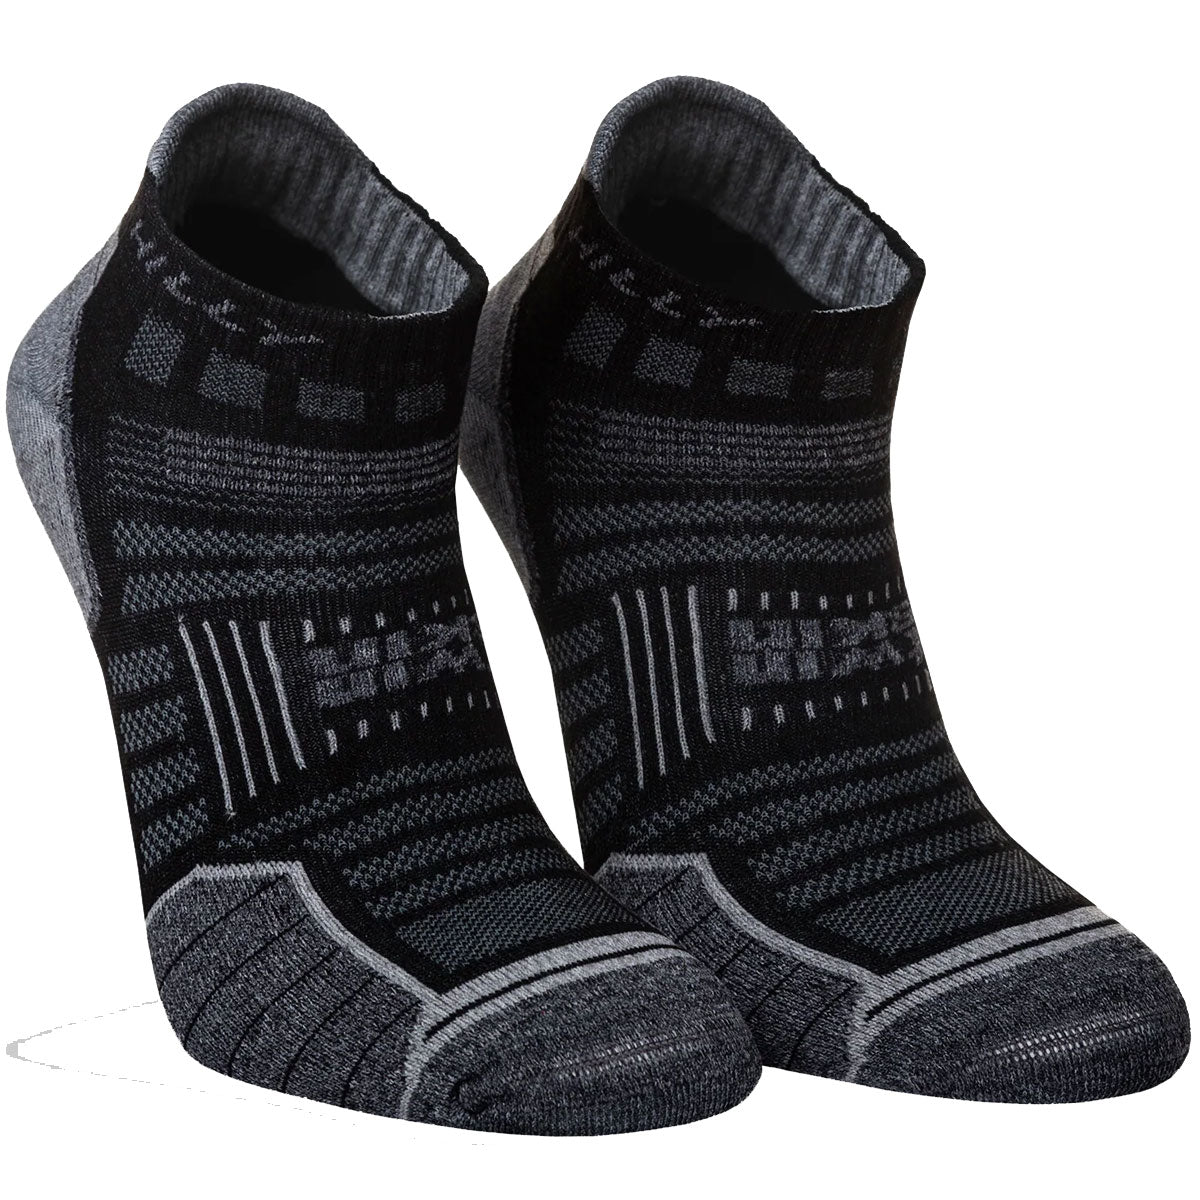 Hilly Twin Skin Socklet Min Socks - Mens - Black/Grey Marl